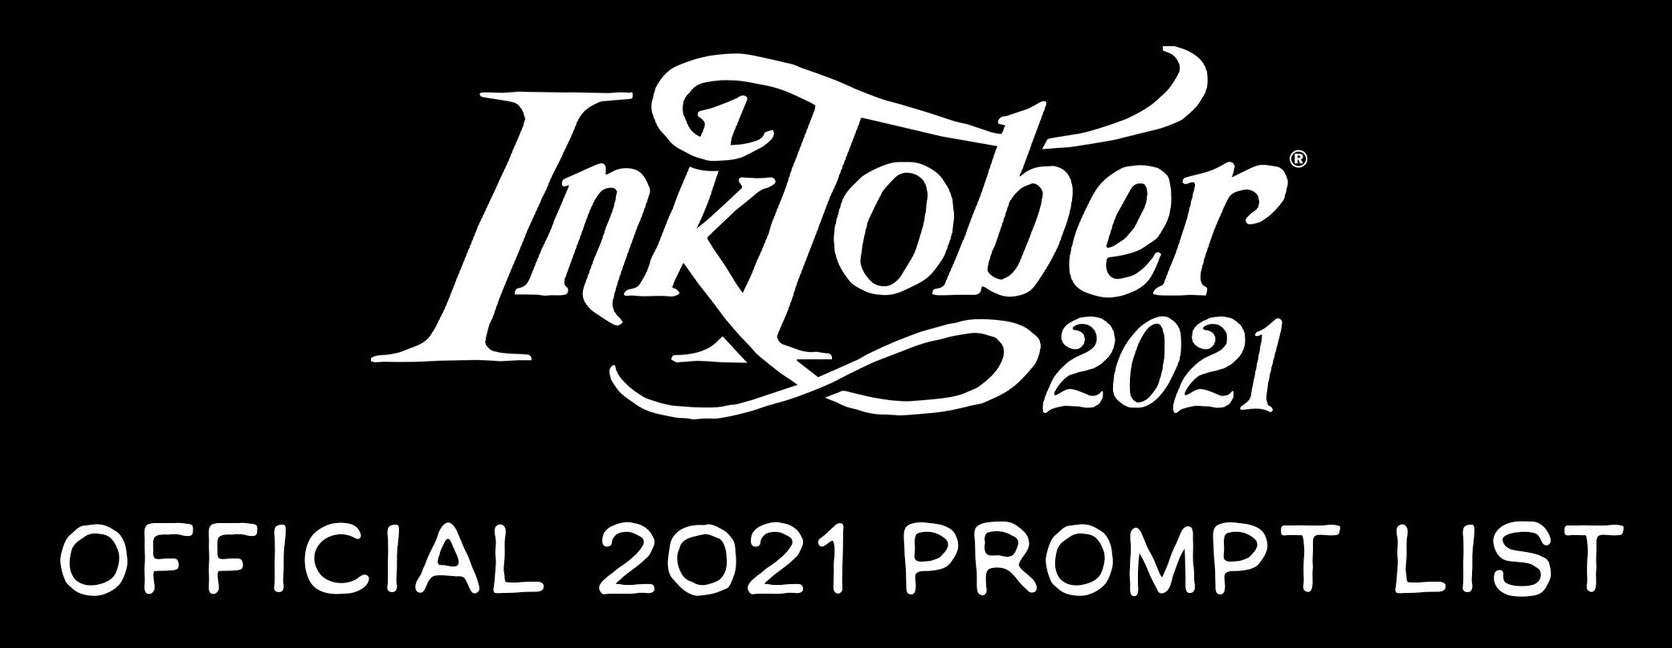 Inktober 2021 Prompt List